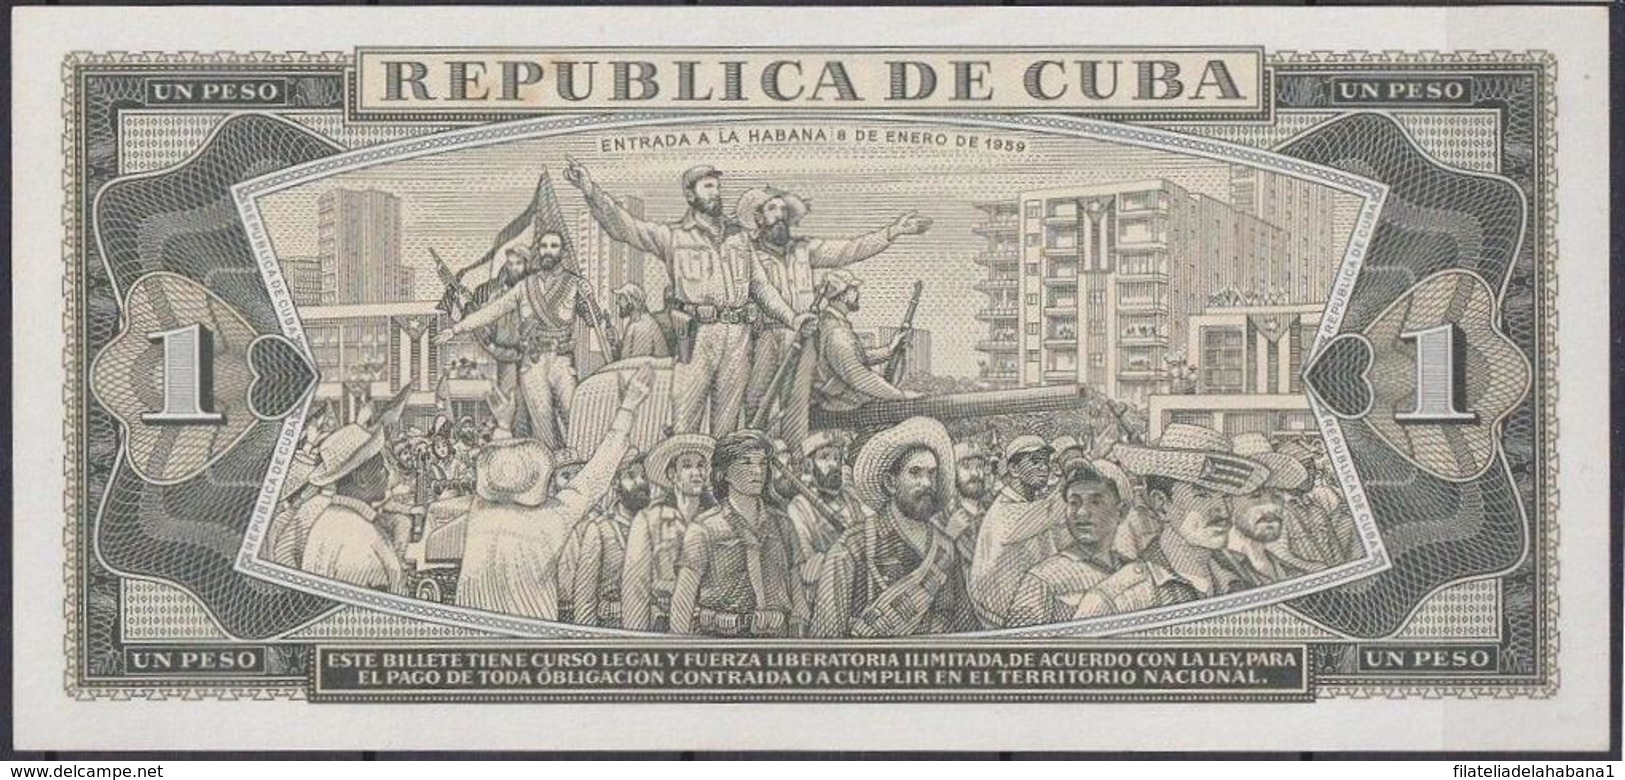 1988-BK-11 CUBA 1980 1$ JOSE MARTI. BANCO NACIONAL UNC. - Cuba